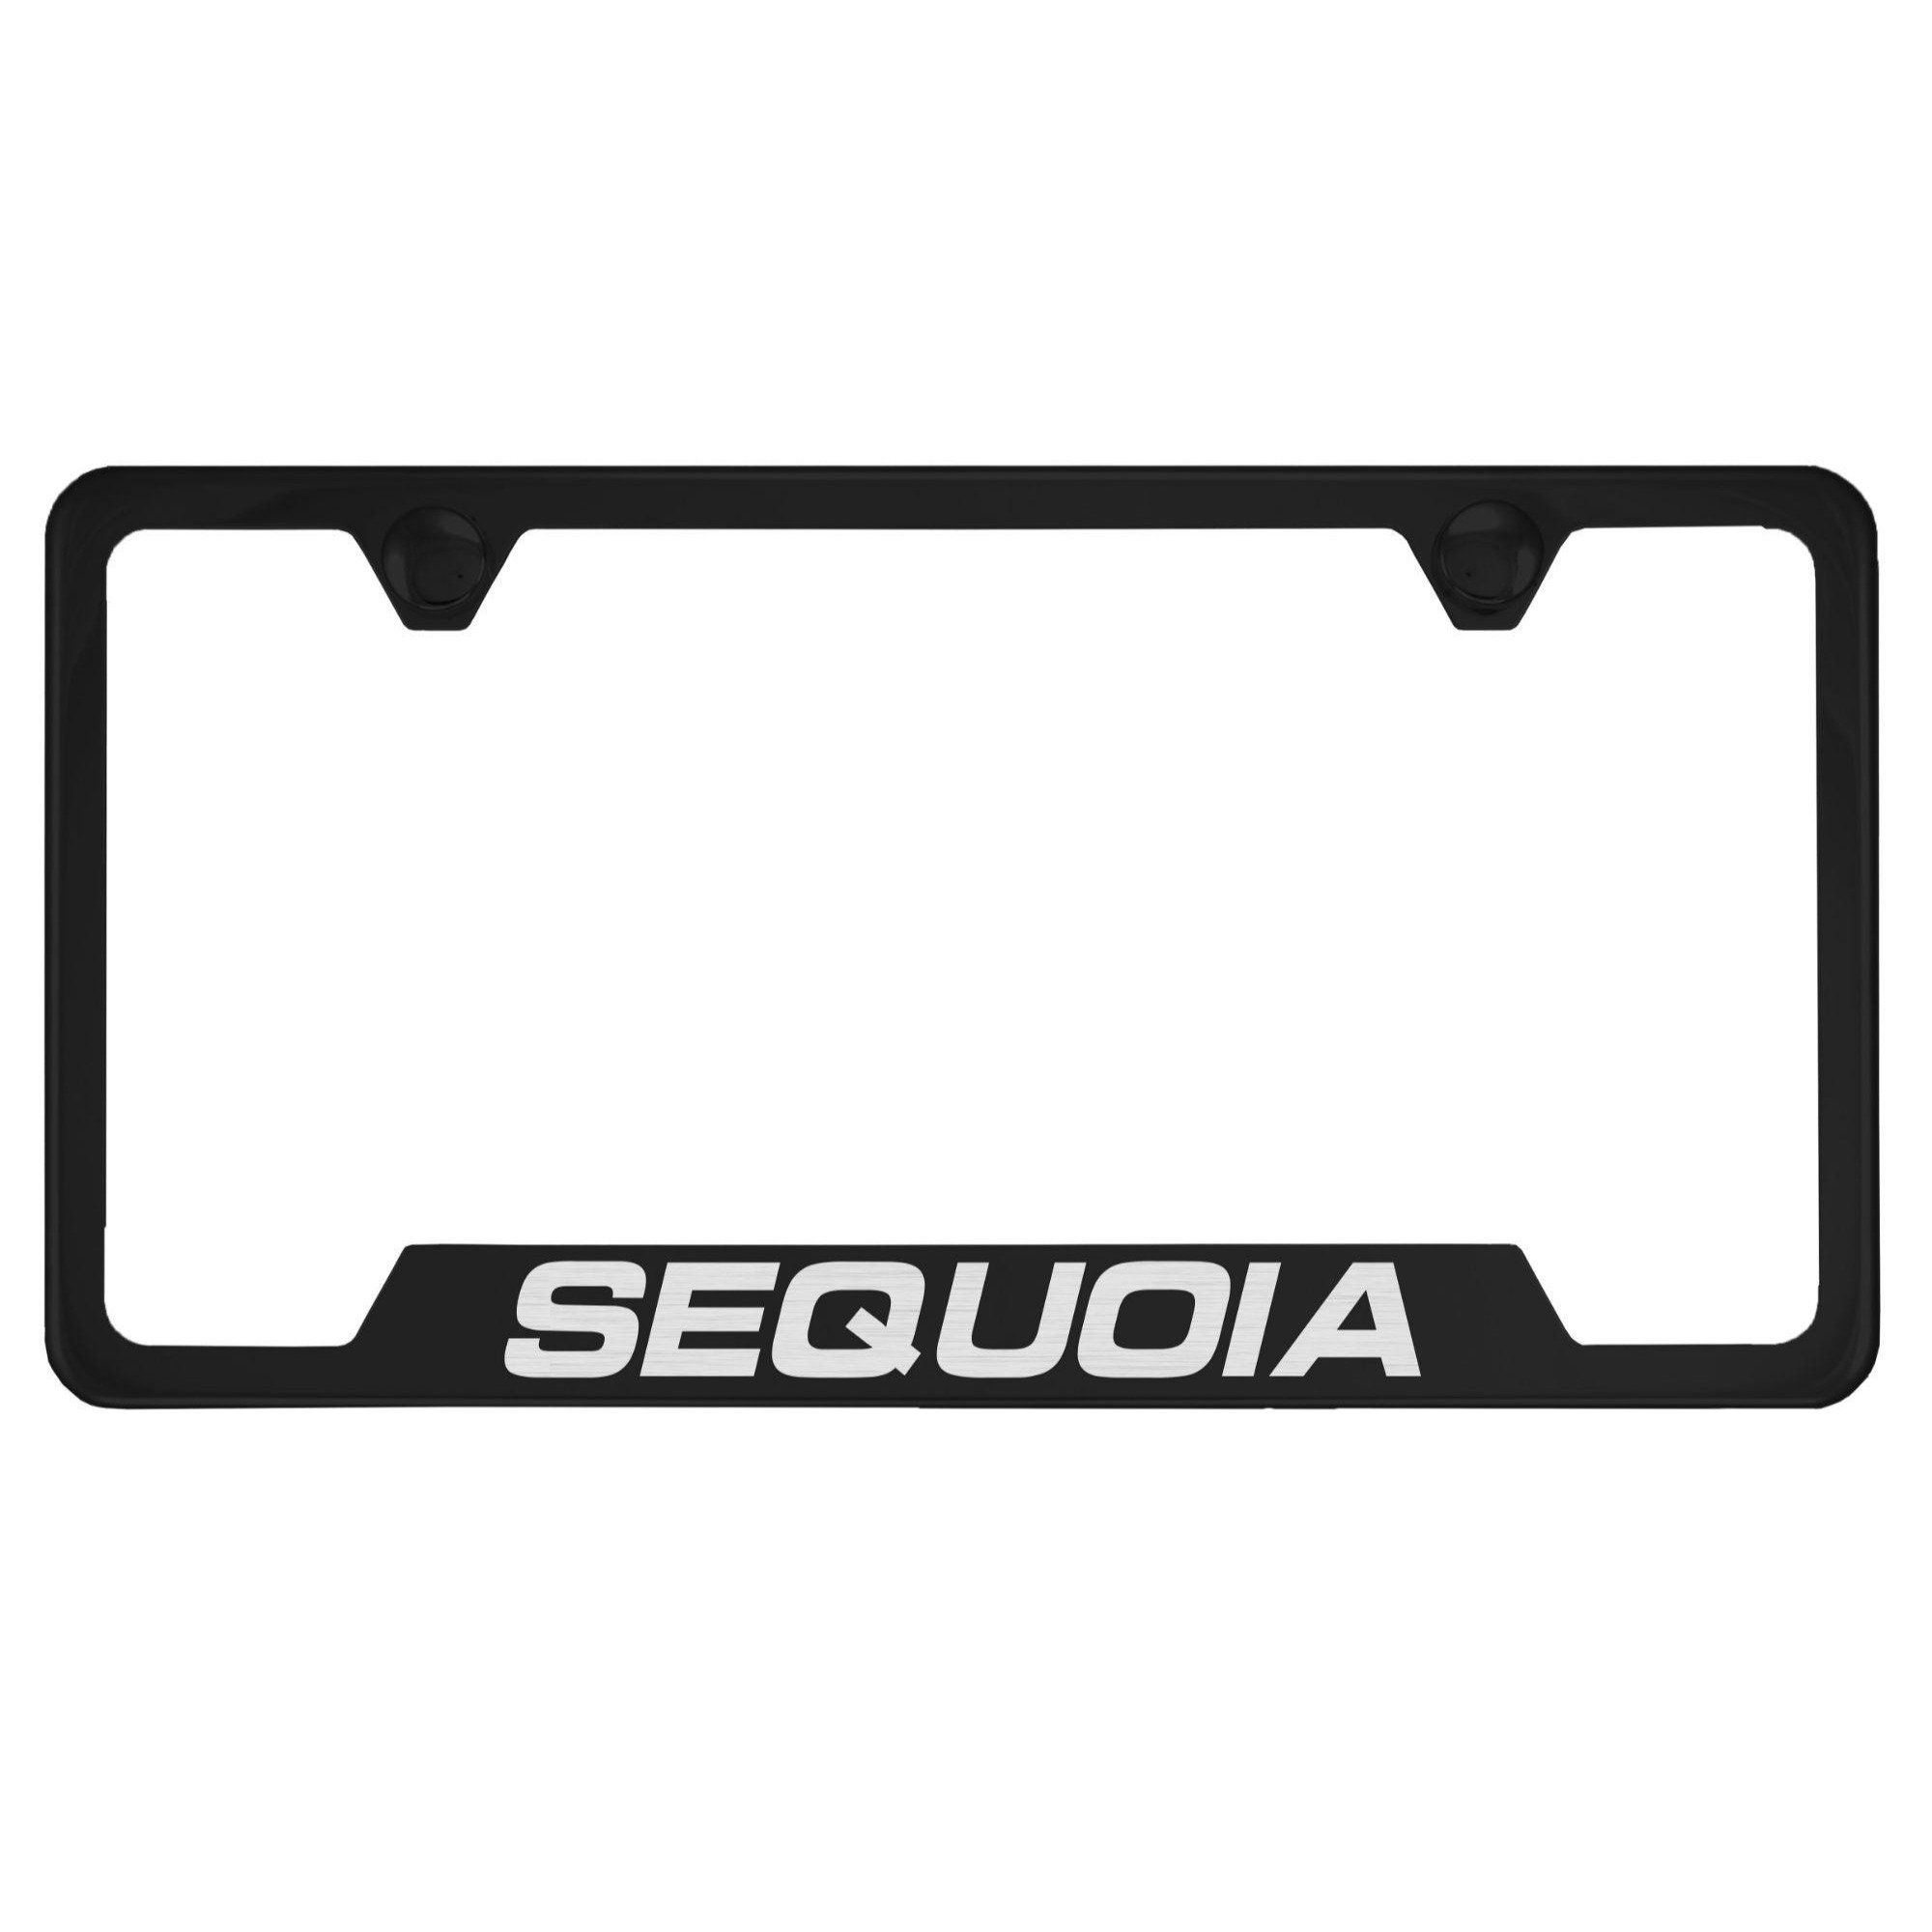 Toyota Sequoia Black License Plate Frame Etsy